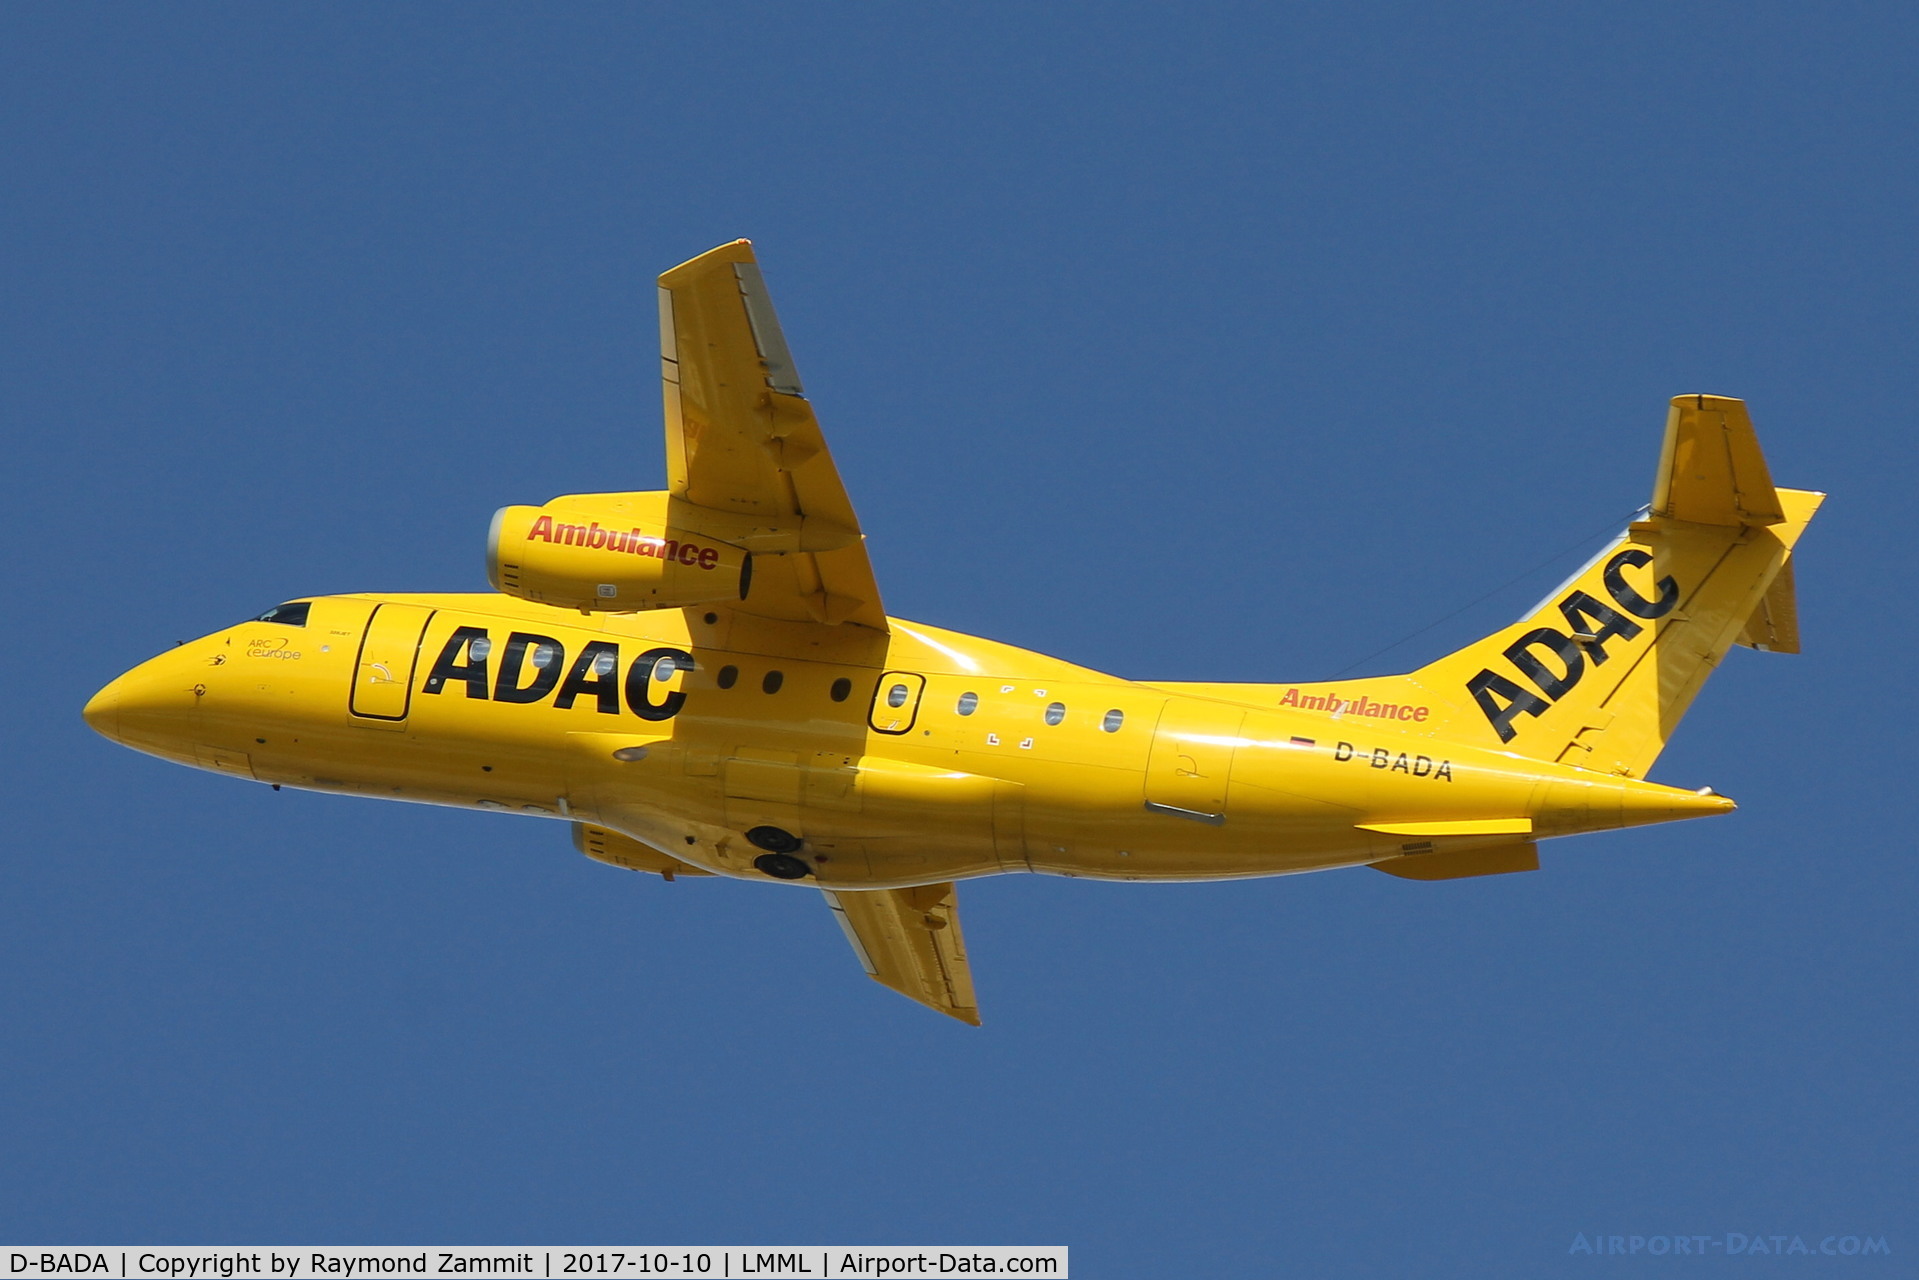 D-BADA, 1998 Fairchild Dornier 328-310 328JET C/N 3224, Dornier328 D-BADA ADAC Ambulance